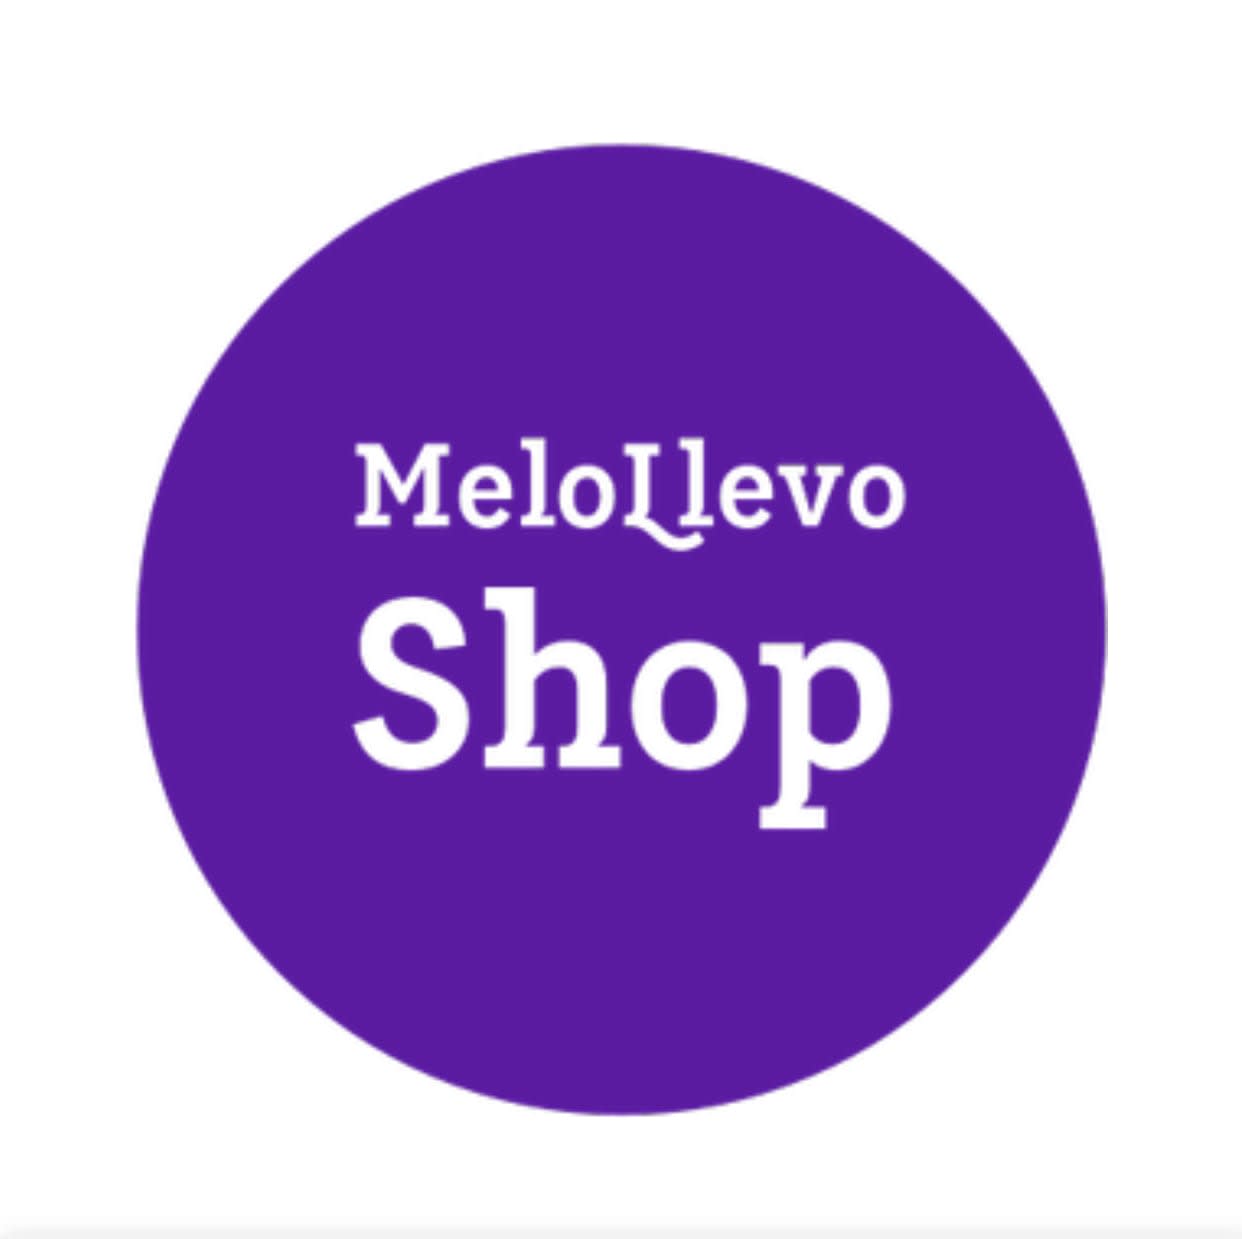 MeloLlevo Shop